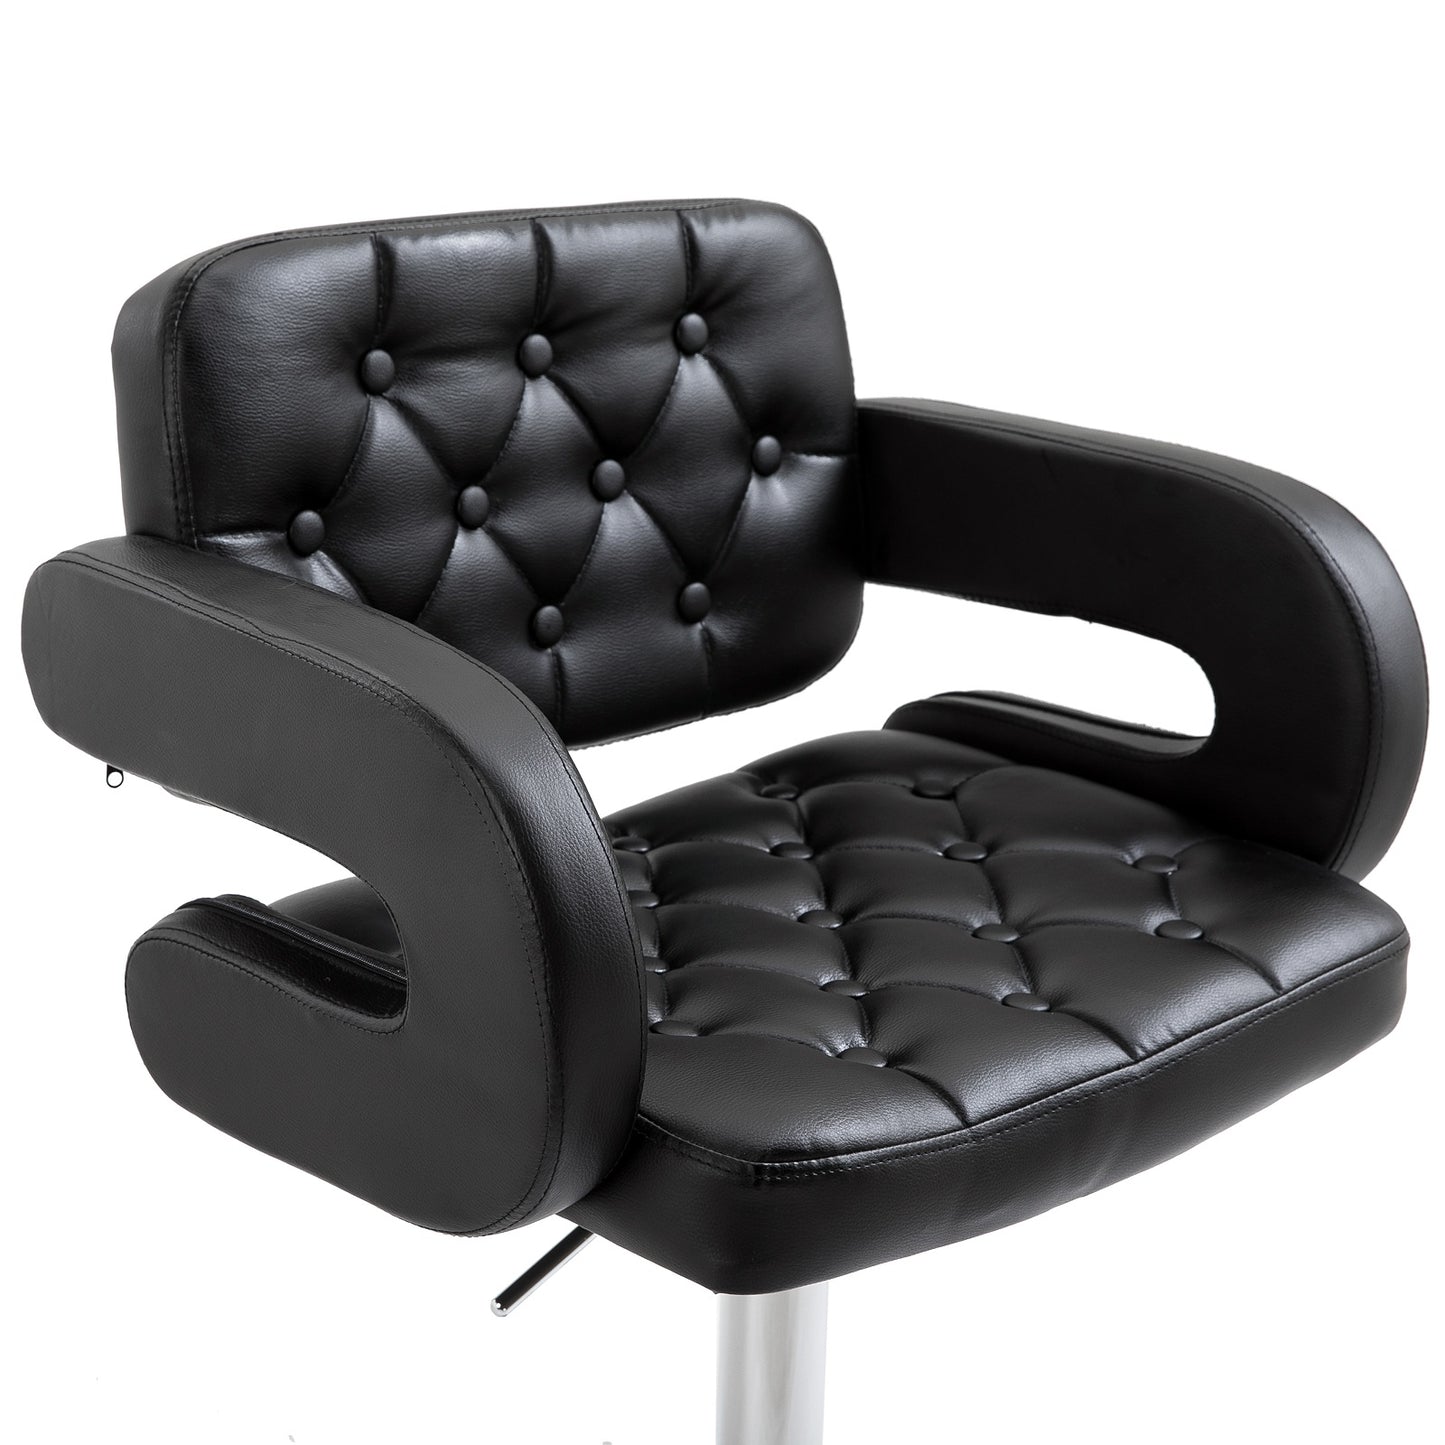 HOMCOM PU Leather Kitchen Bar Stools Swivel Bar Chairs W/Chrome Metal Base - Black